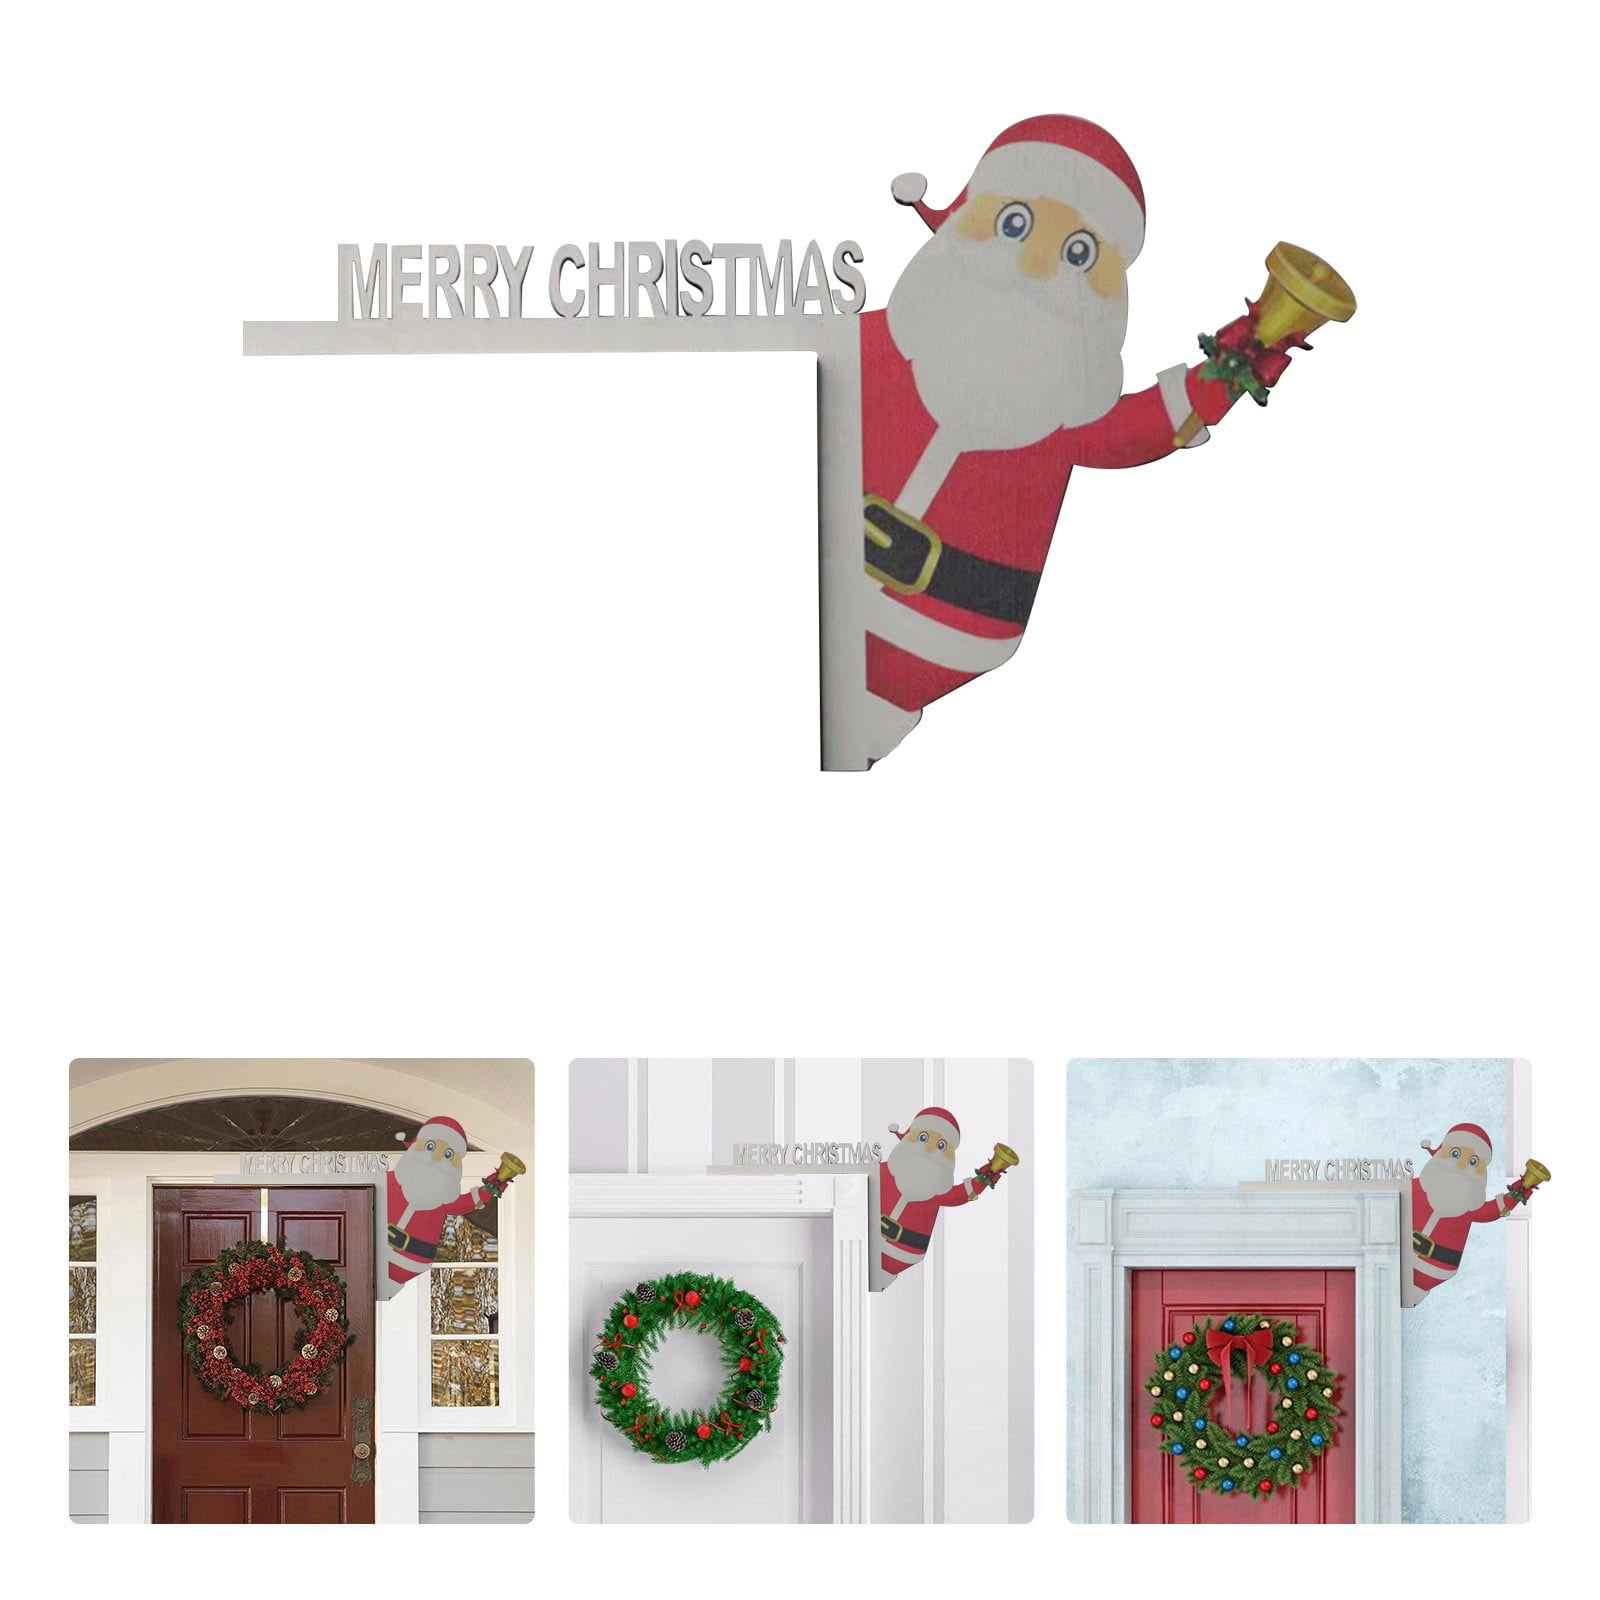 Dainzusyful Gift Cards Holiday Cards Christmas Decorative Creative